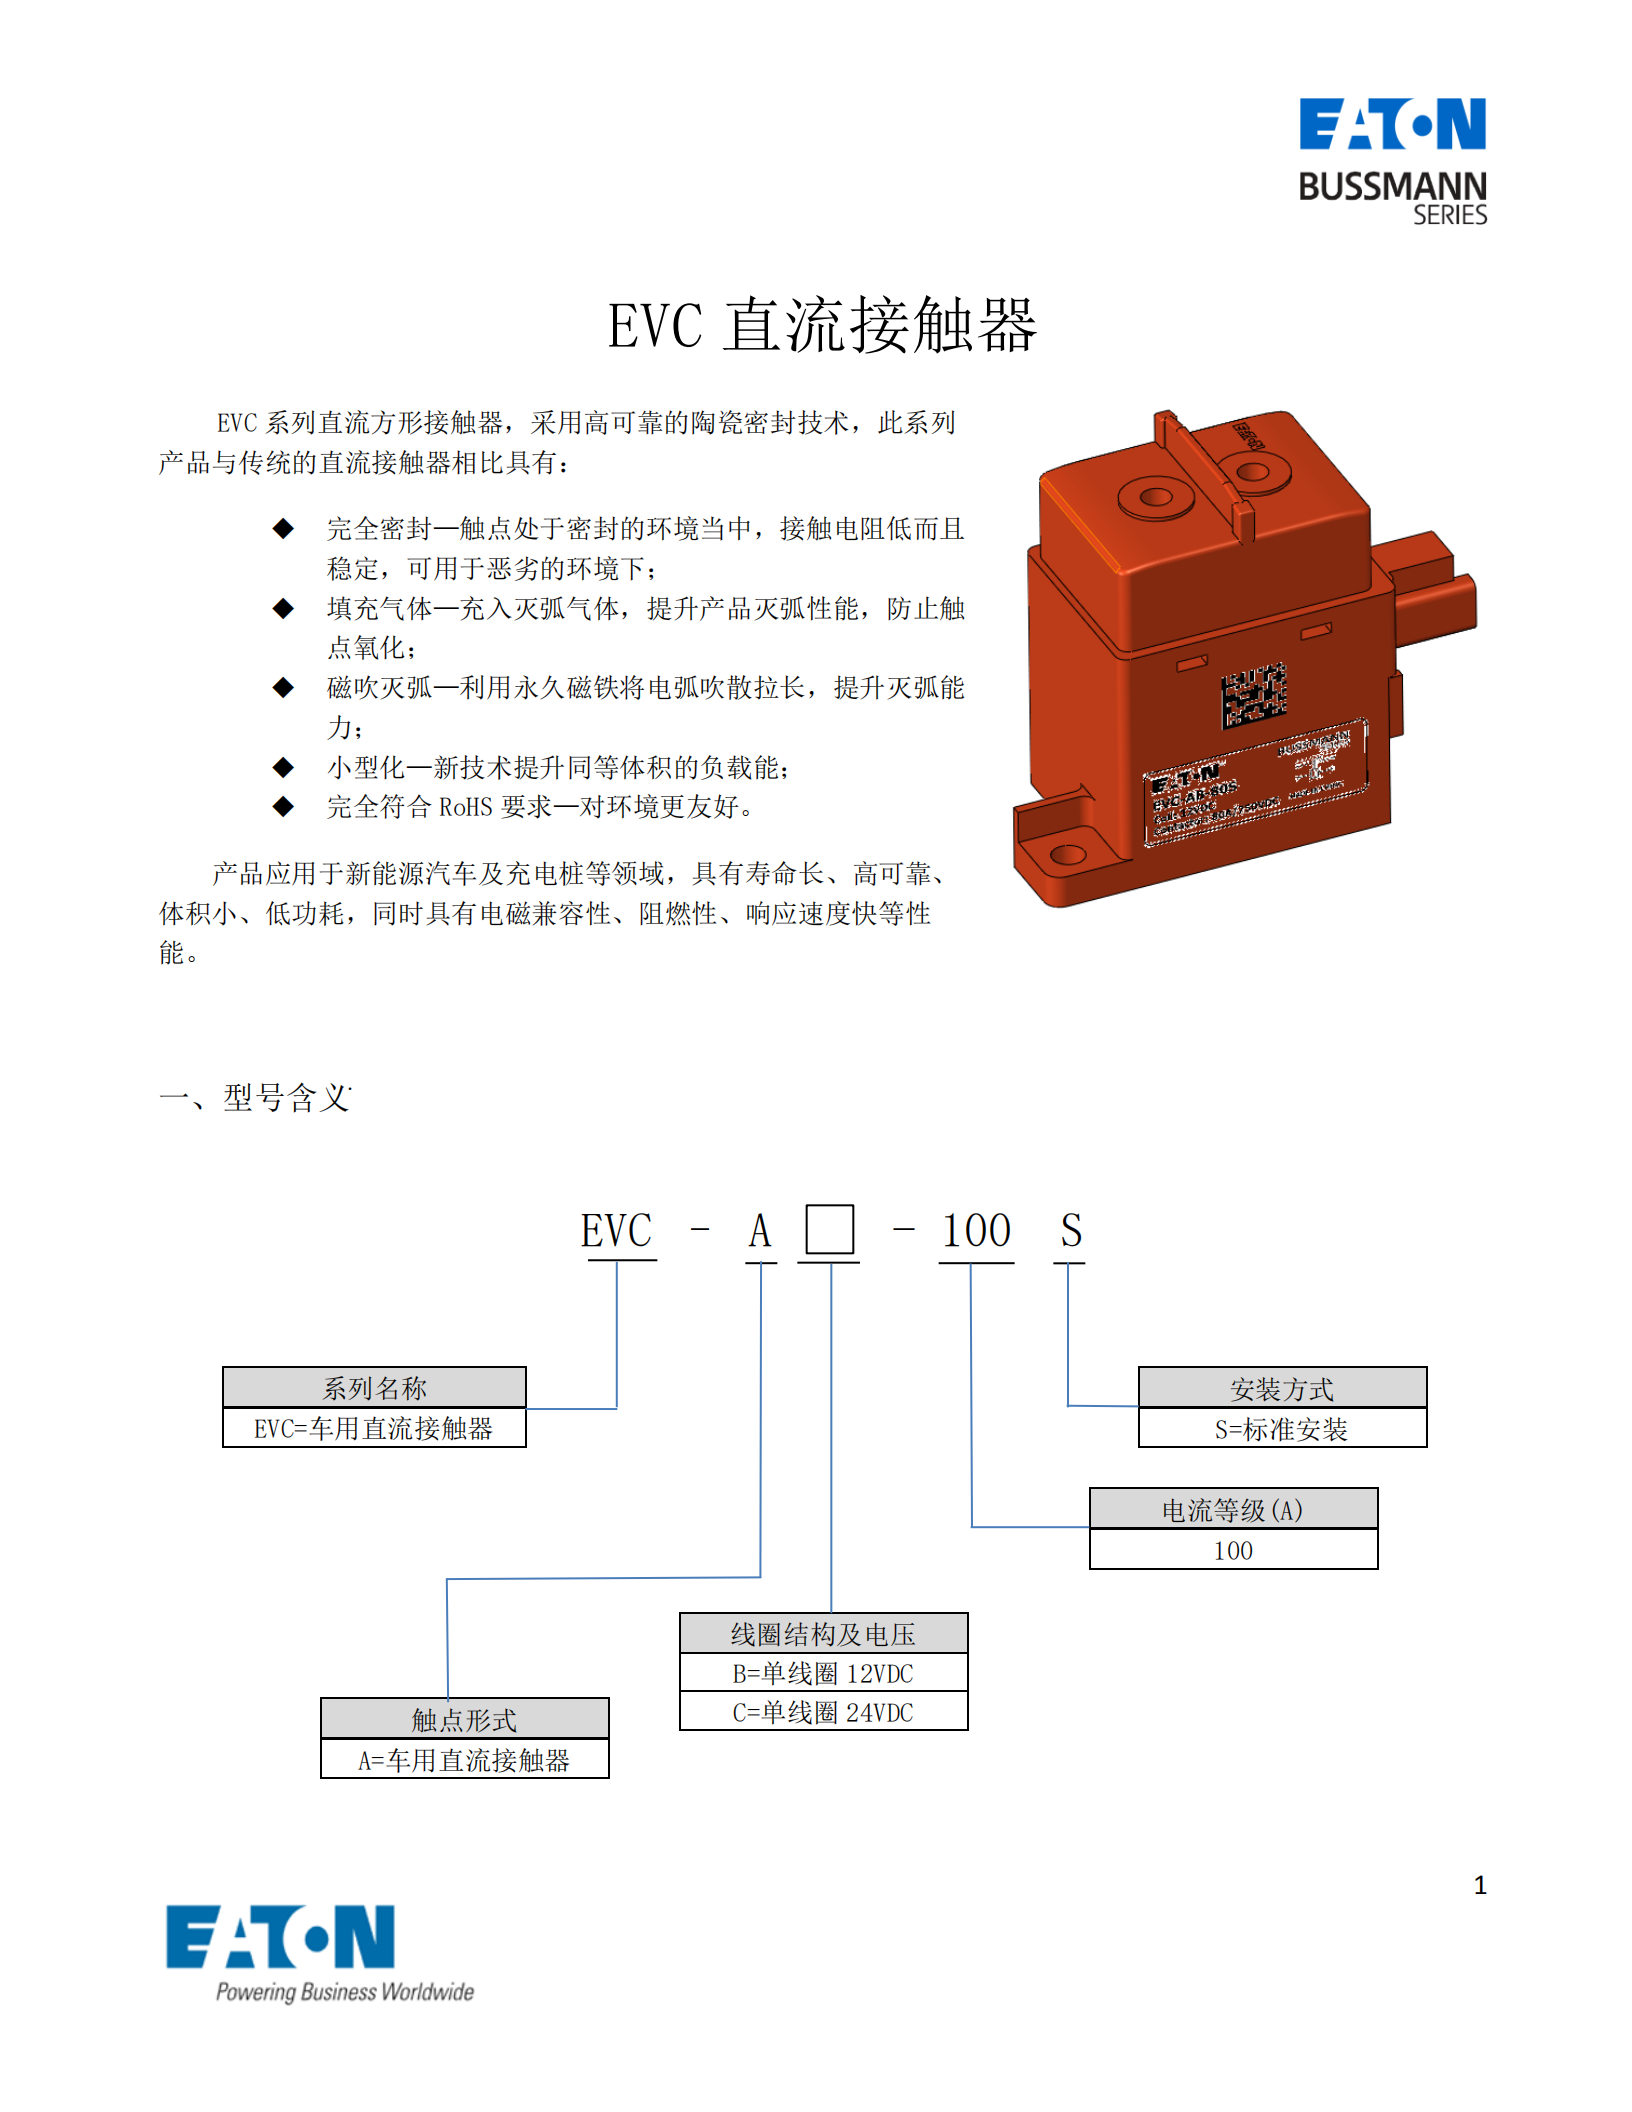 EVC-A-100S直流接触器